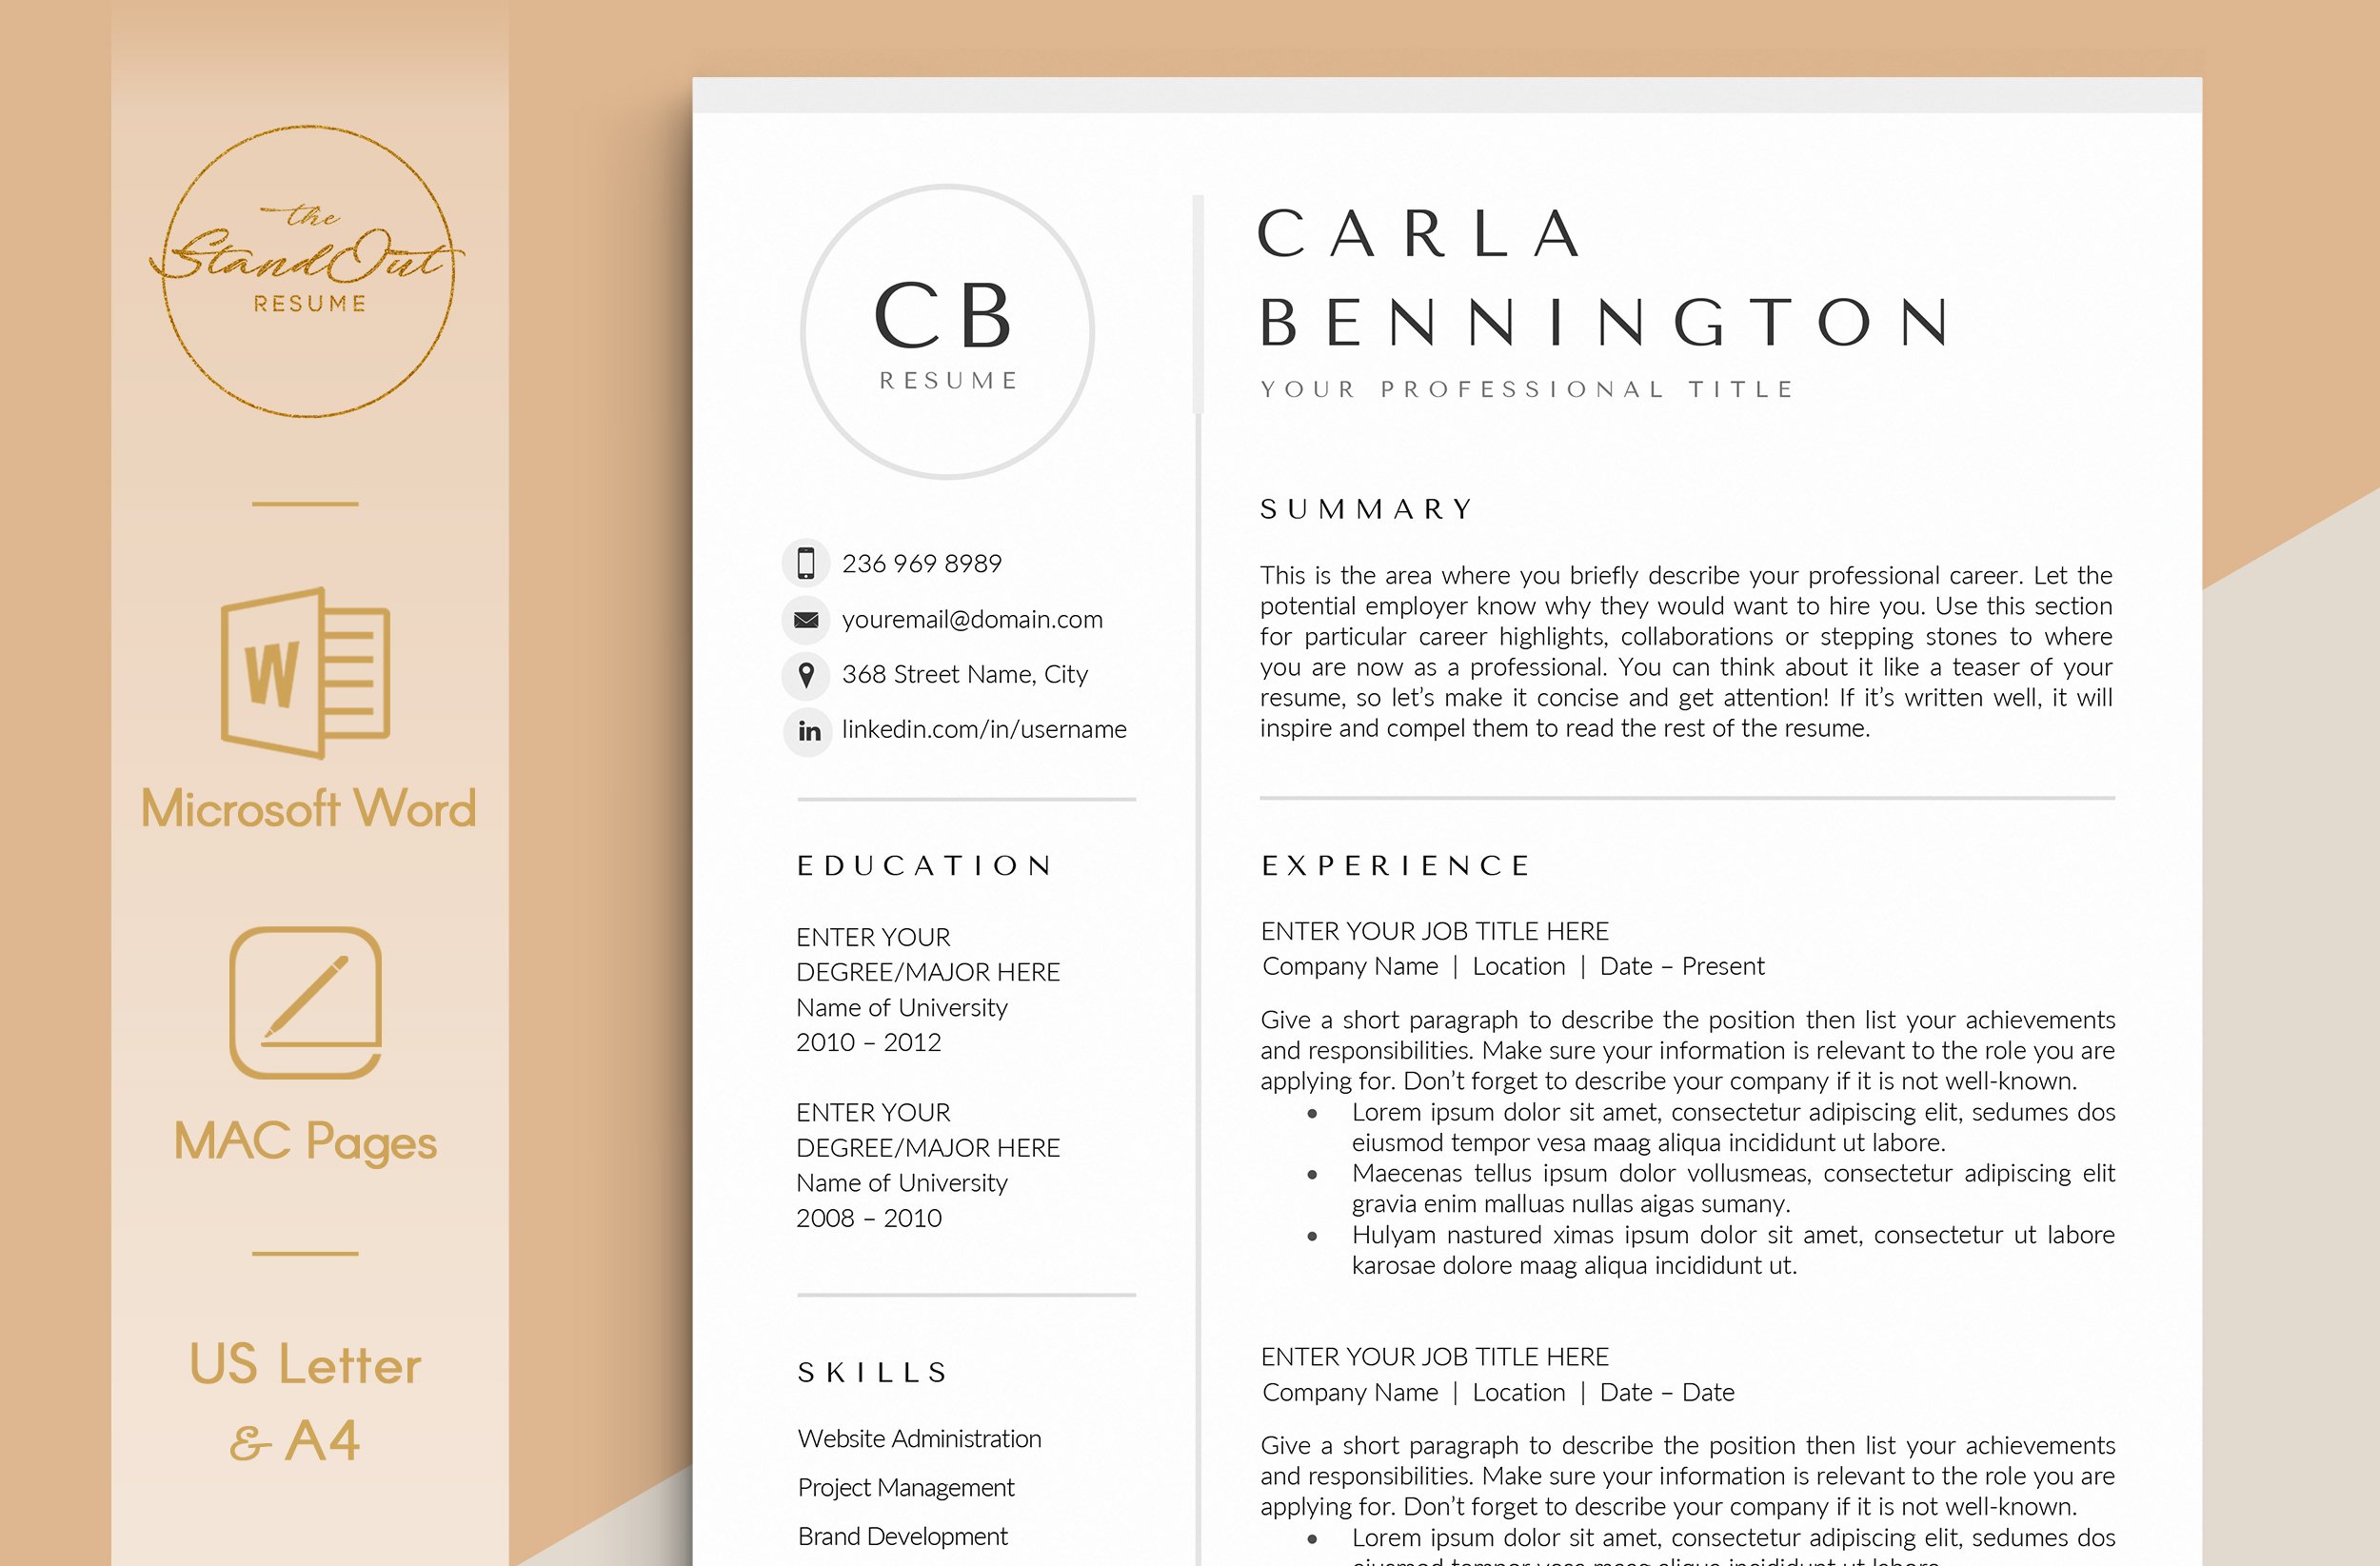 Resume/CV Template - CARLA cover image.